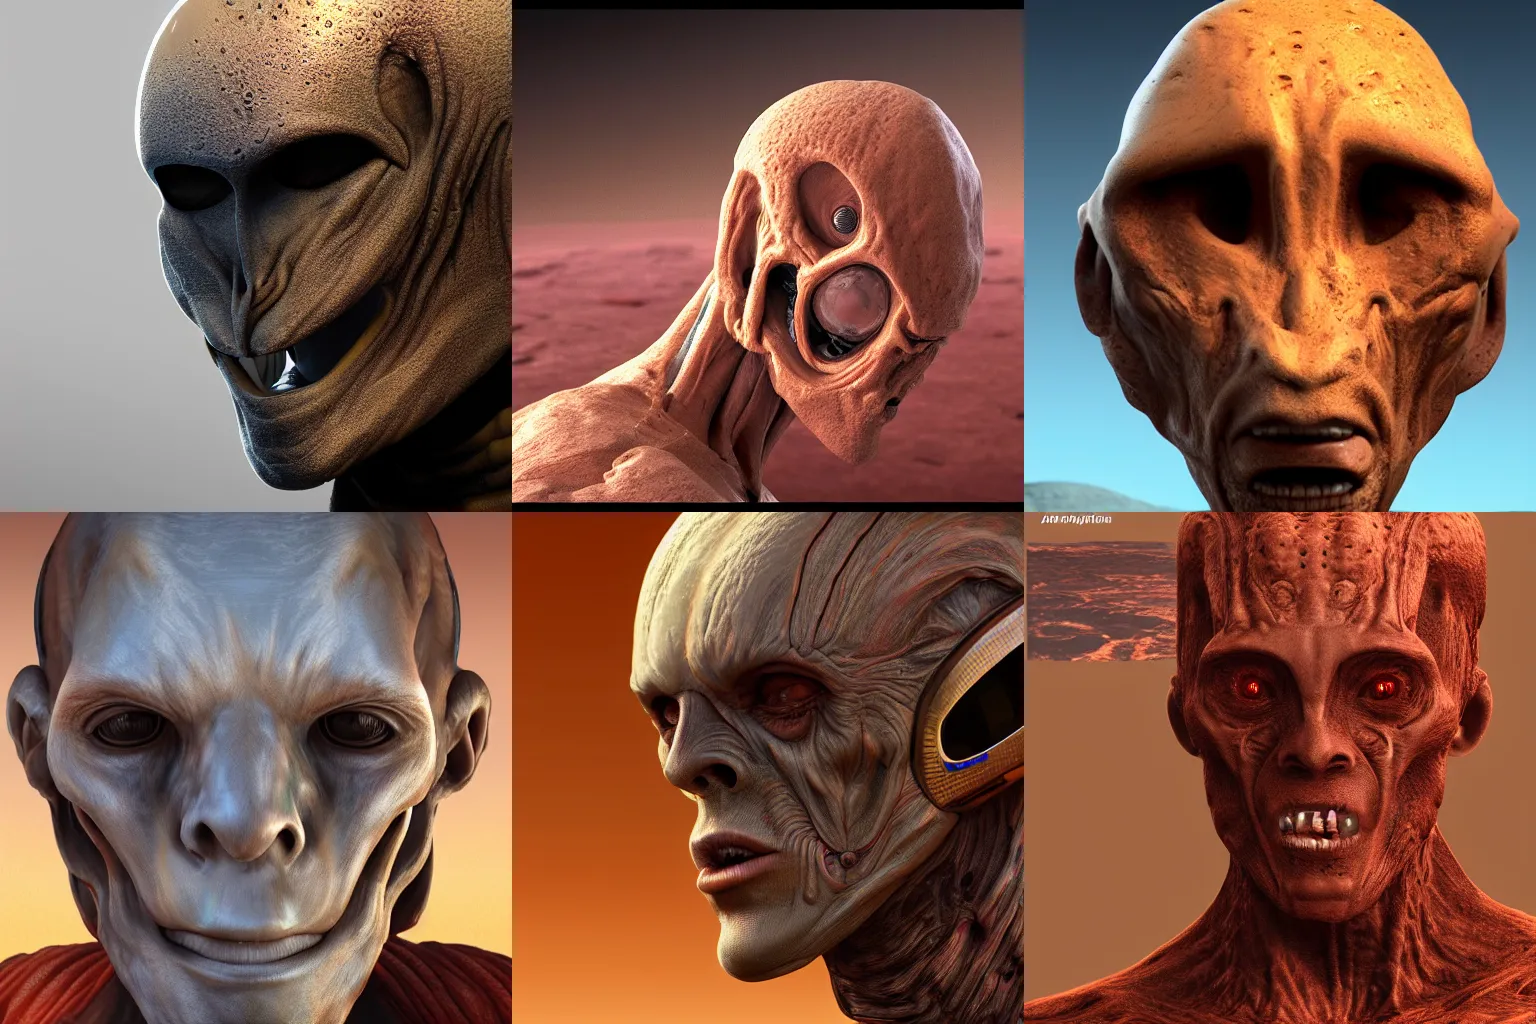 Prompt: Head of humanoid alien on Mars, highly detailed, 8k HDR, digital art, hyper realistic, trending on artstation